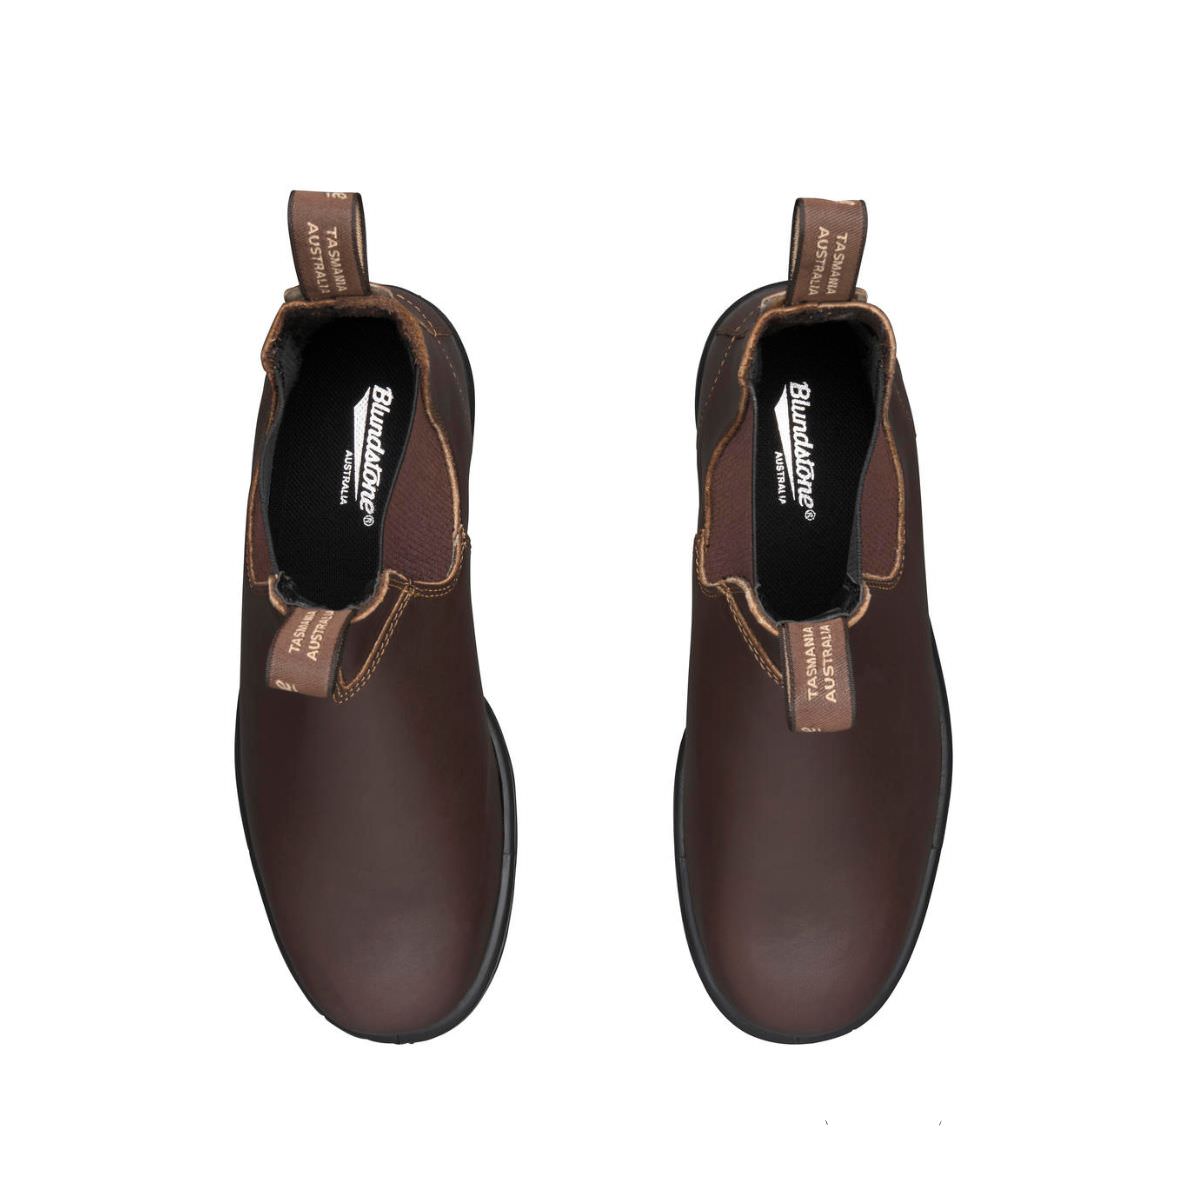 Blundstone Unisex Elastic Sided - Slip on Safety Boots - Chestnut Brown #200